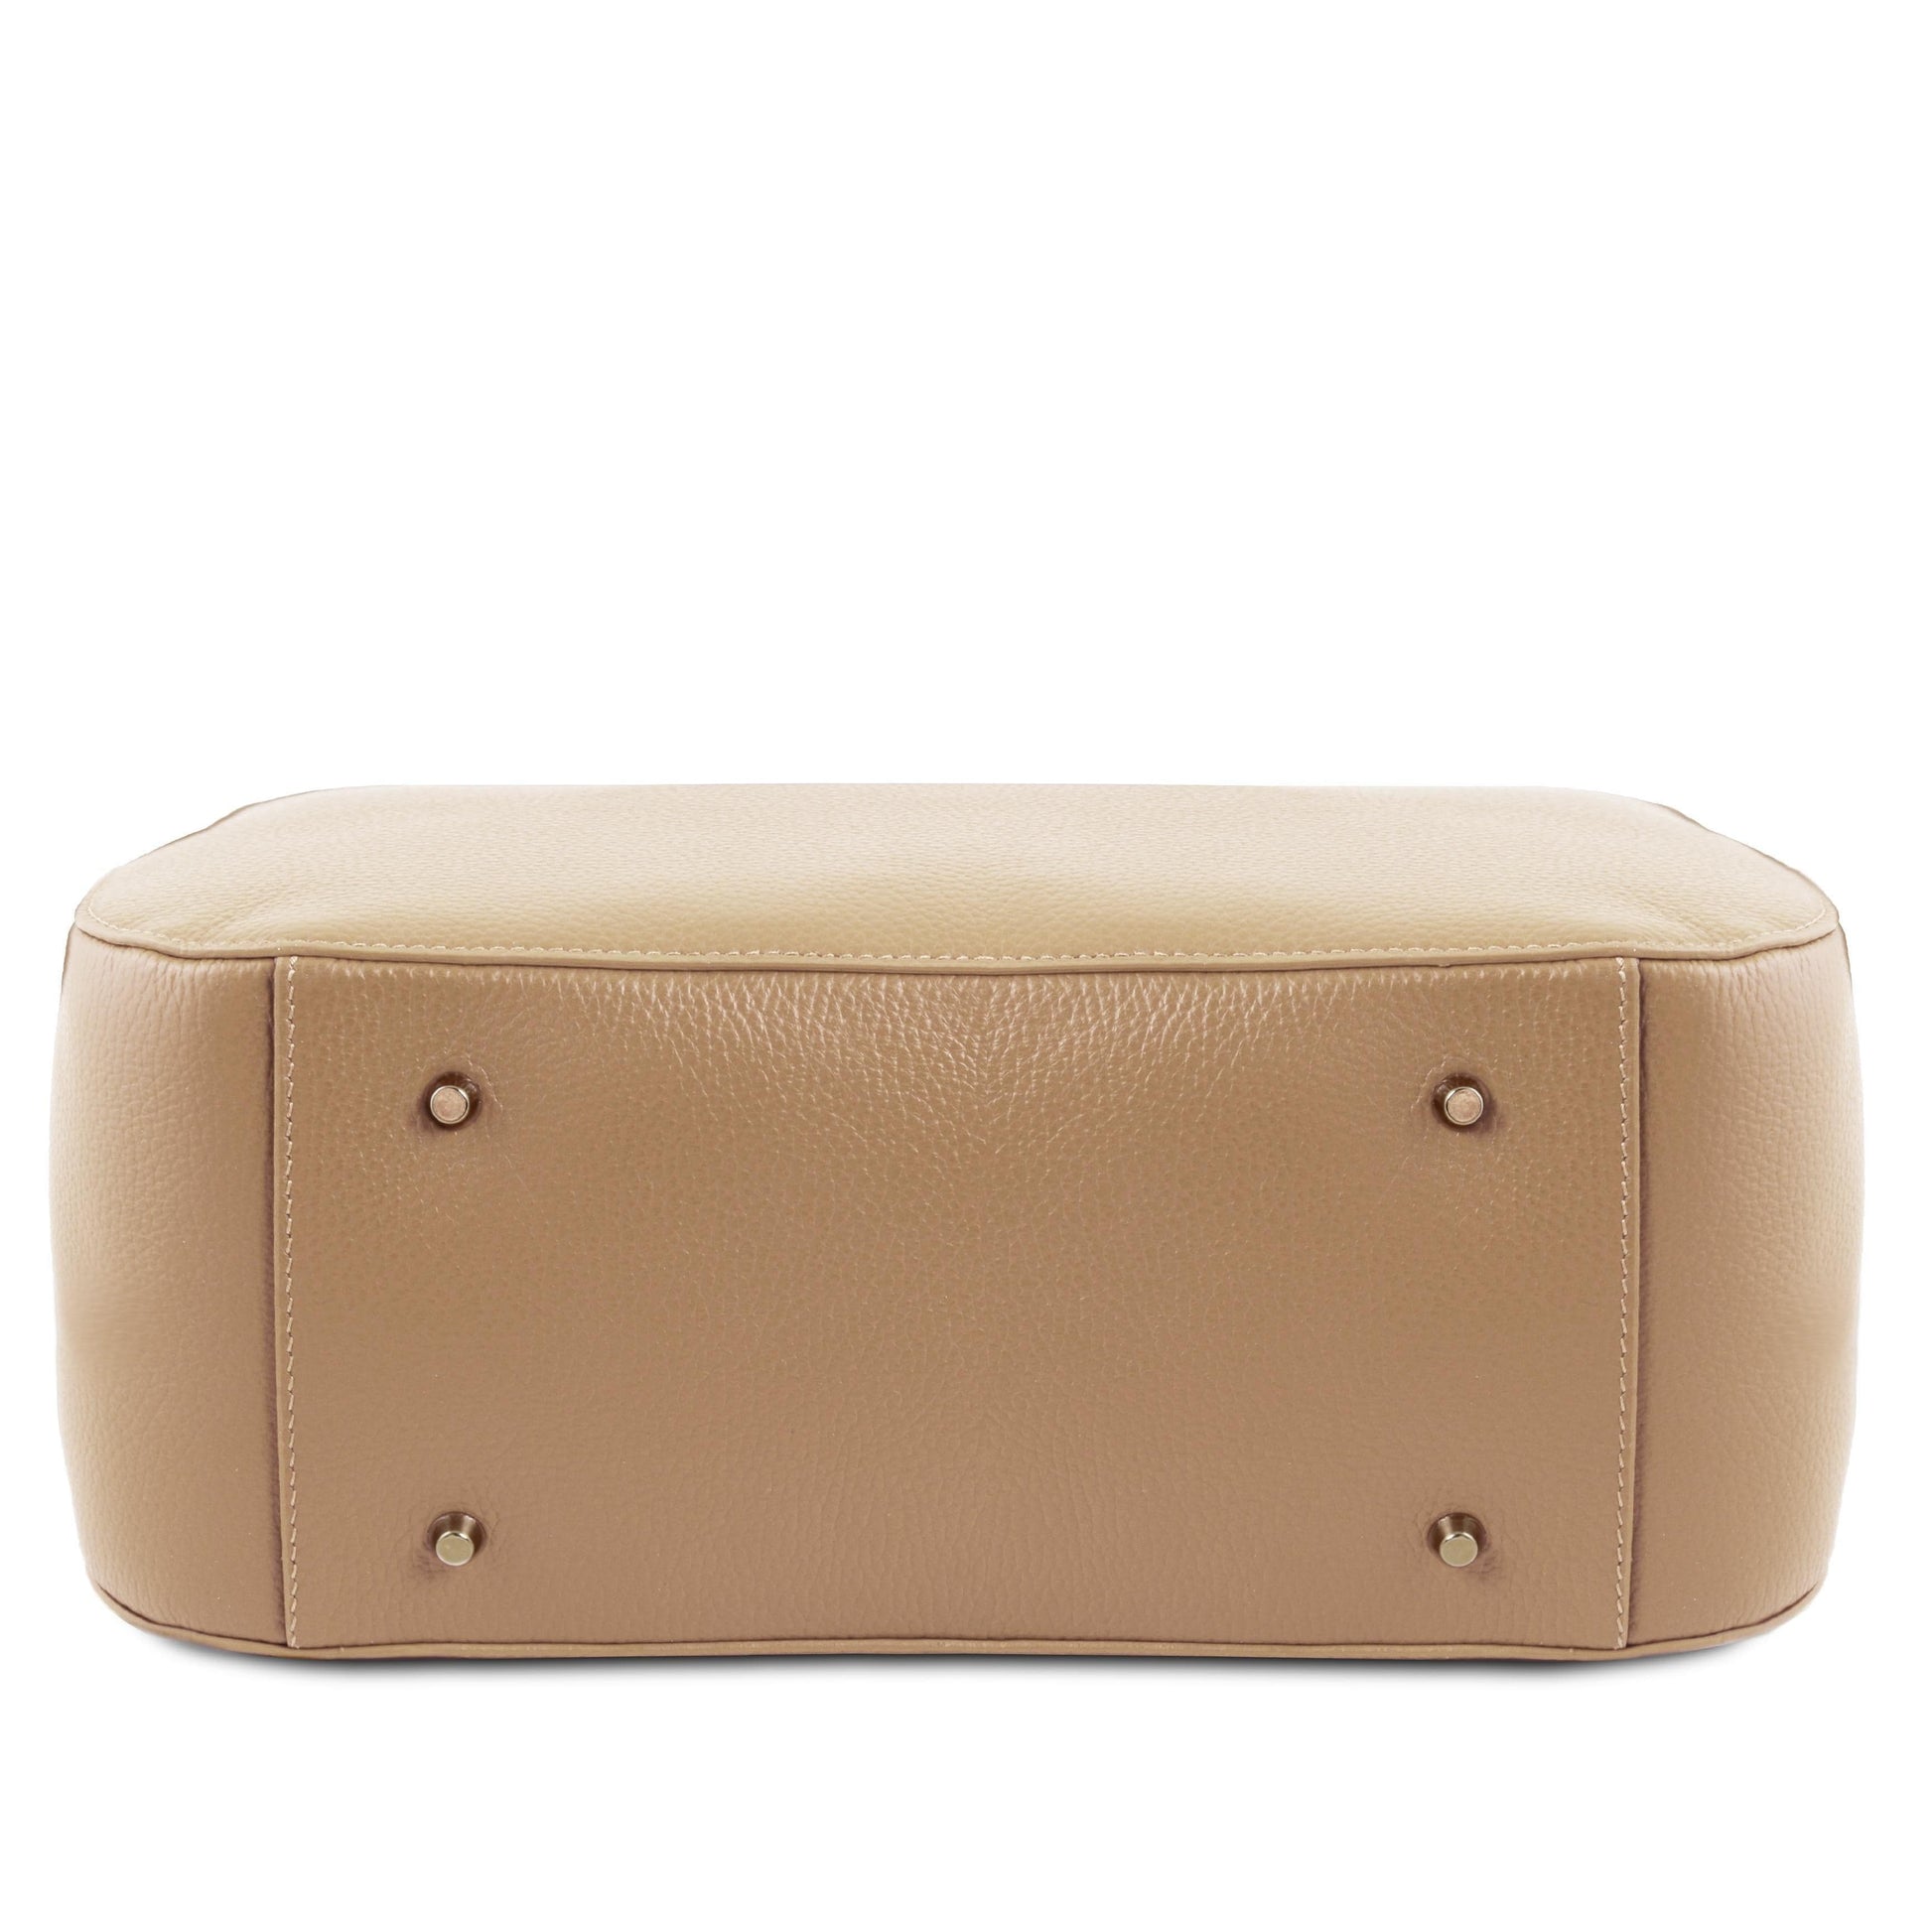 Camelia - Leather handbag | TL141728 - Premium Leather handbags - Shop now at San Rocco Italia